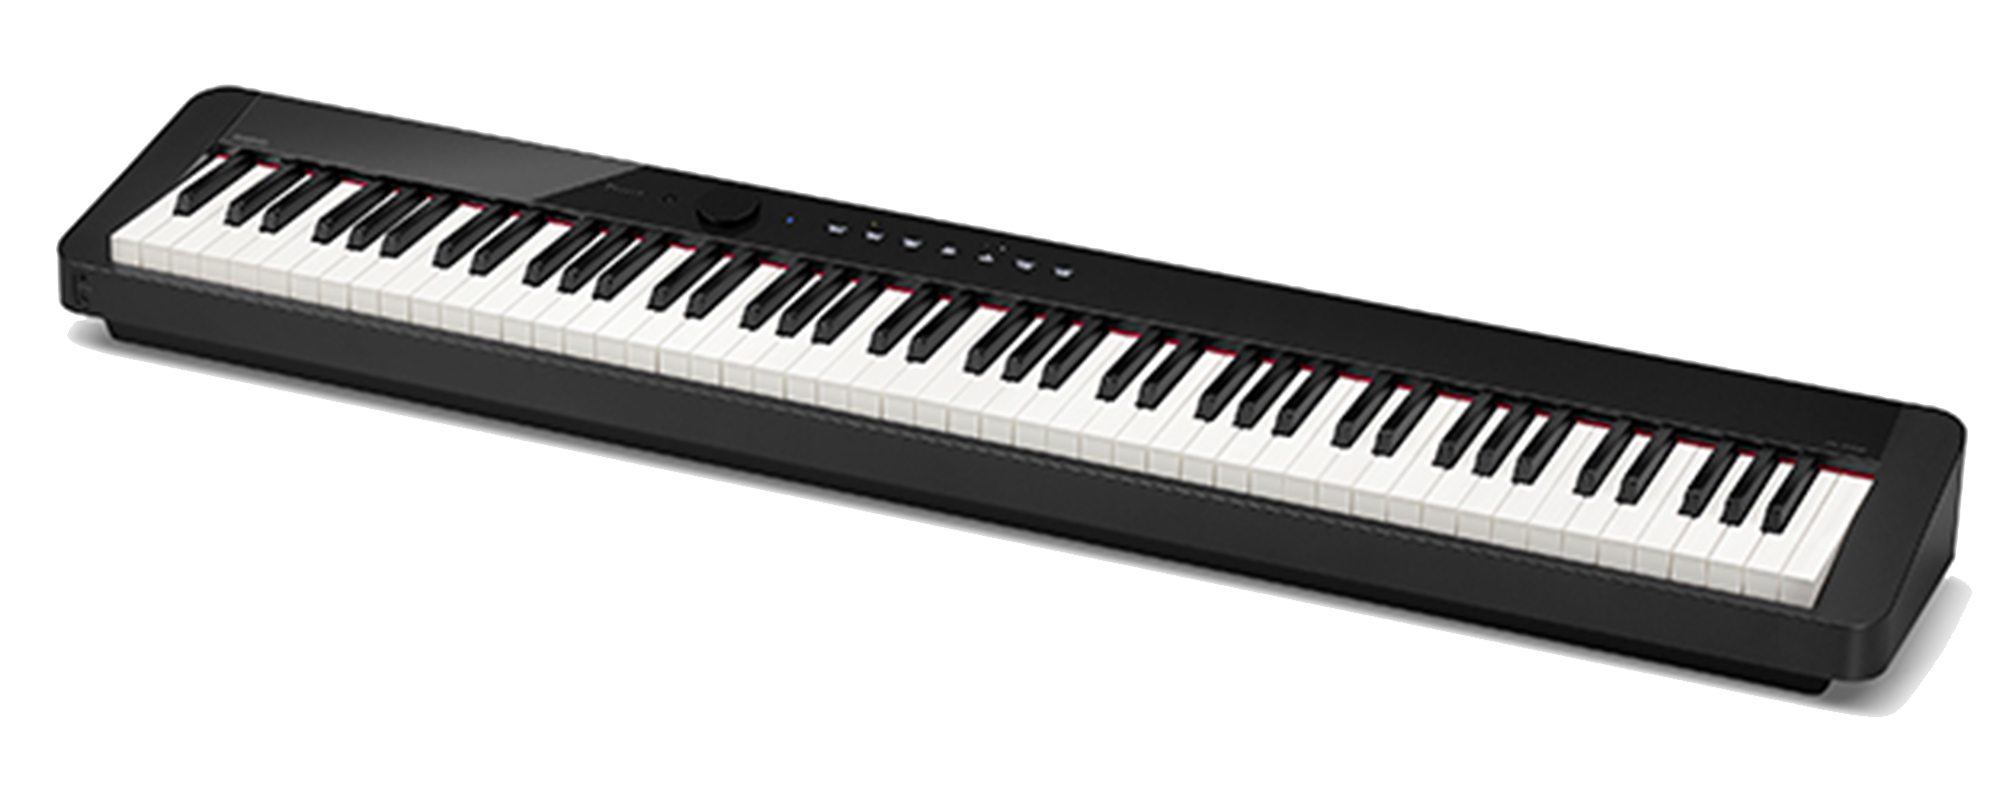 casio px-s1000 black digital piano singapore